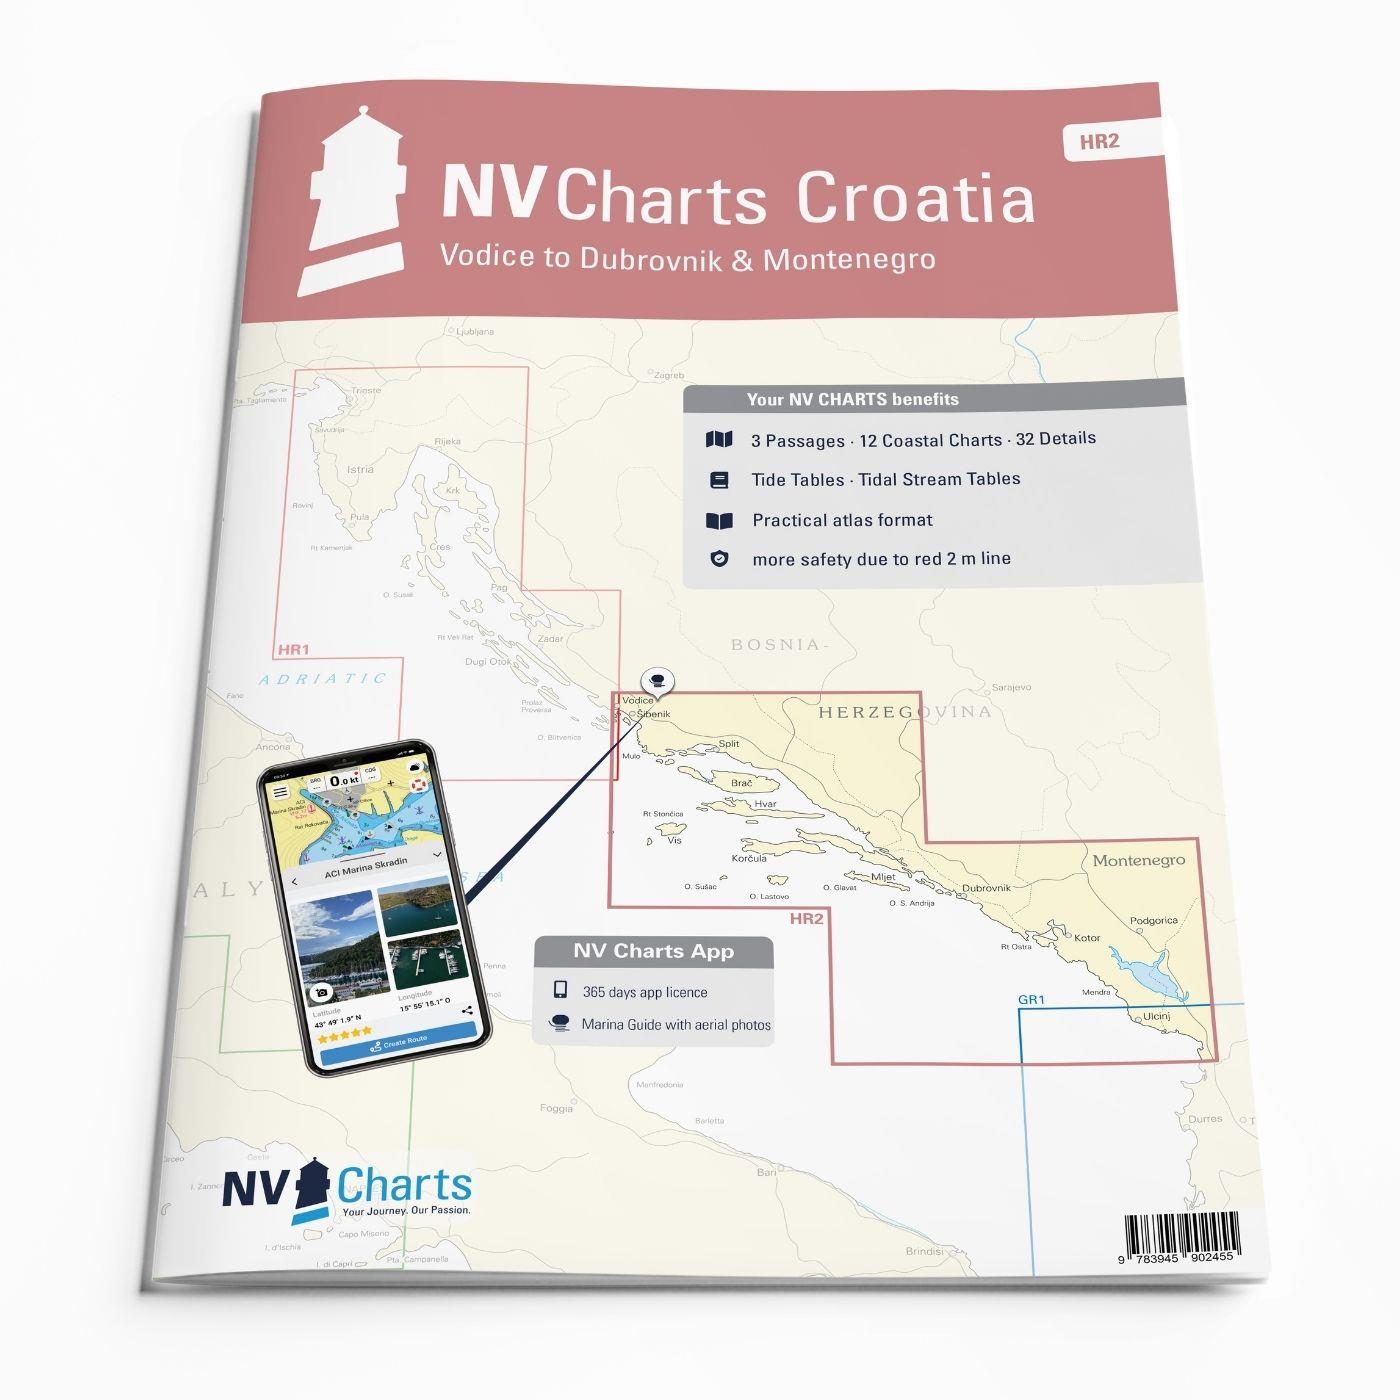 NV Charts Croatia HR 2 Vodice to Dubrovnik & Montenegro